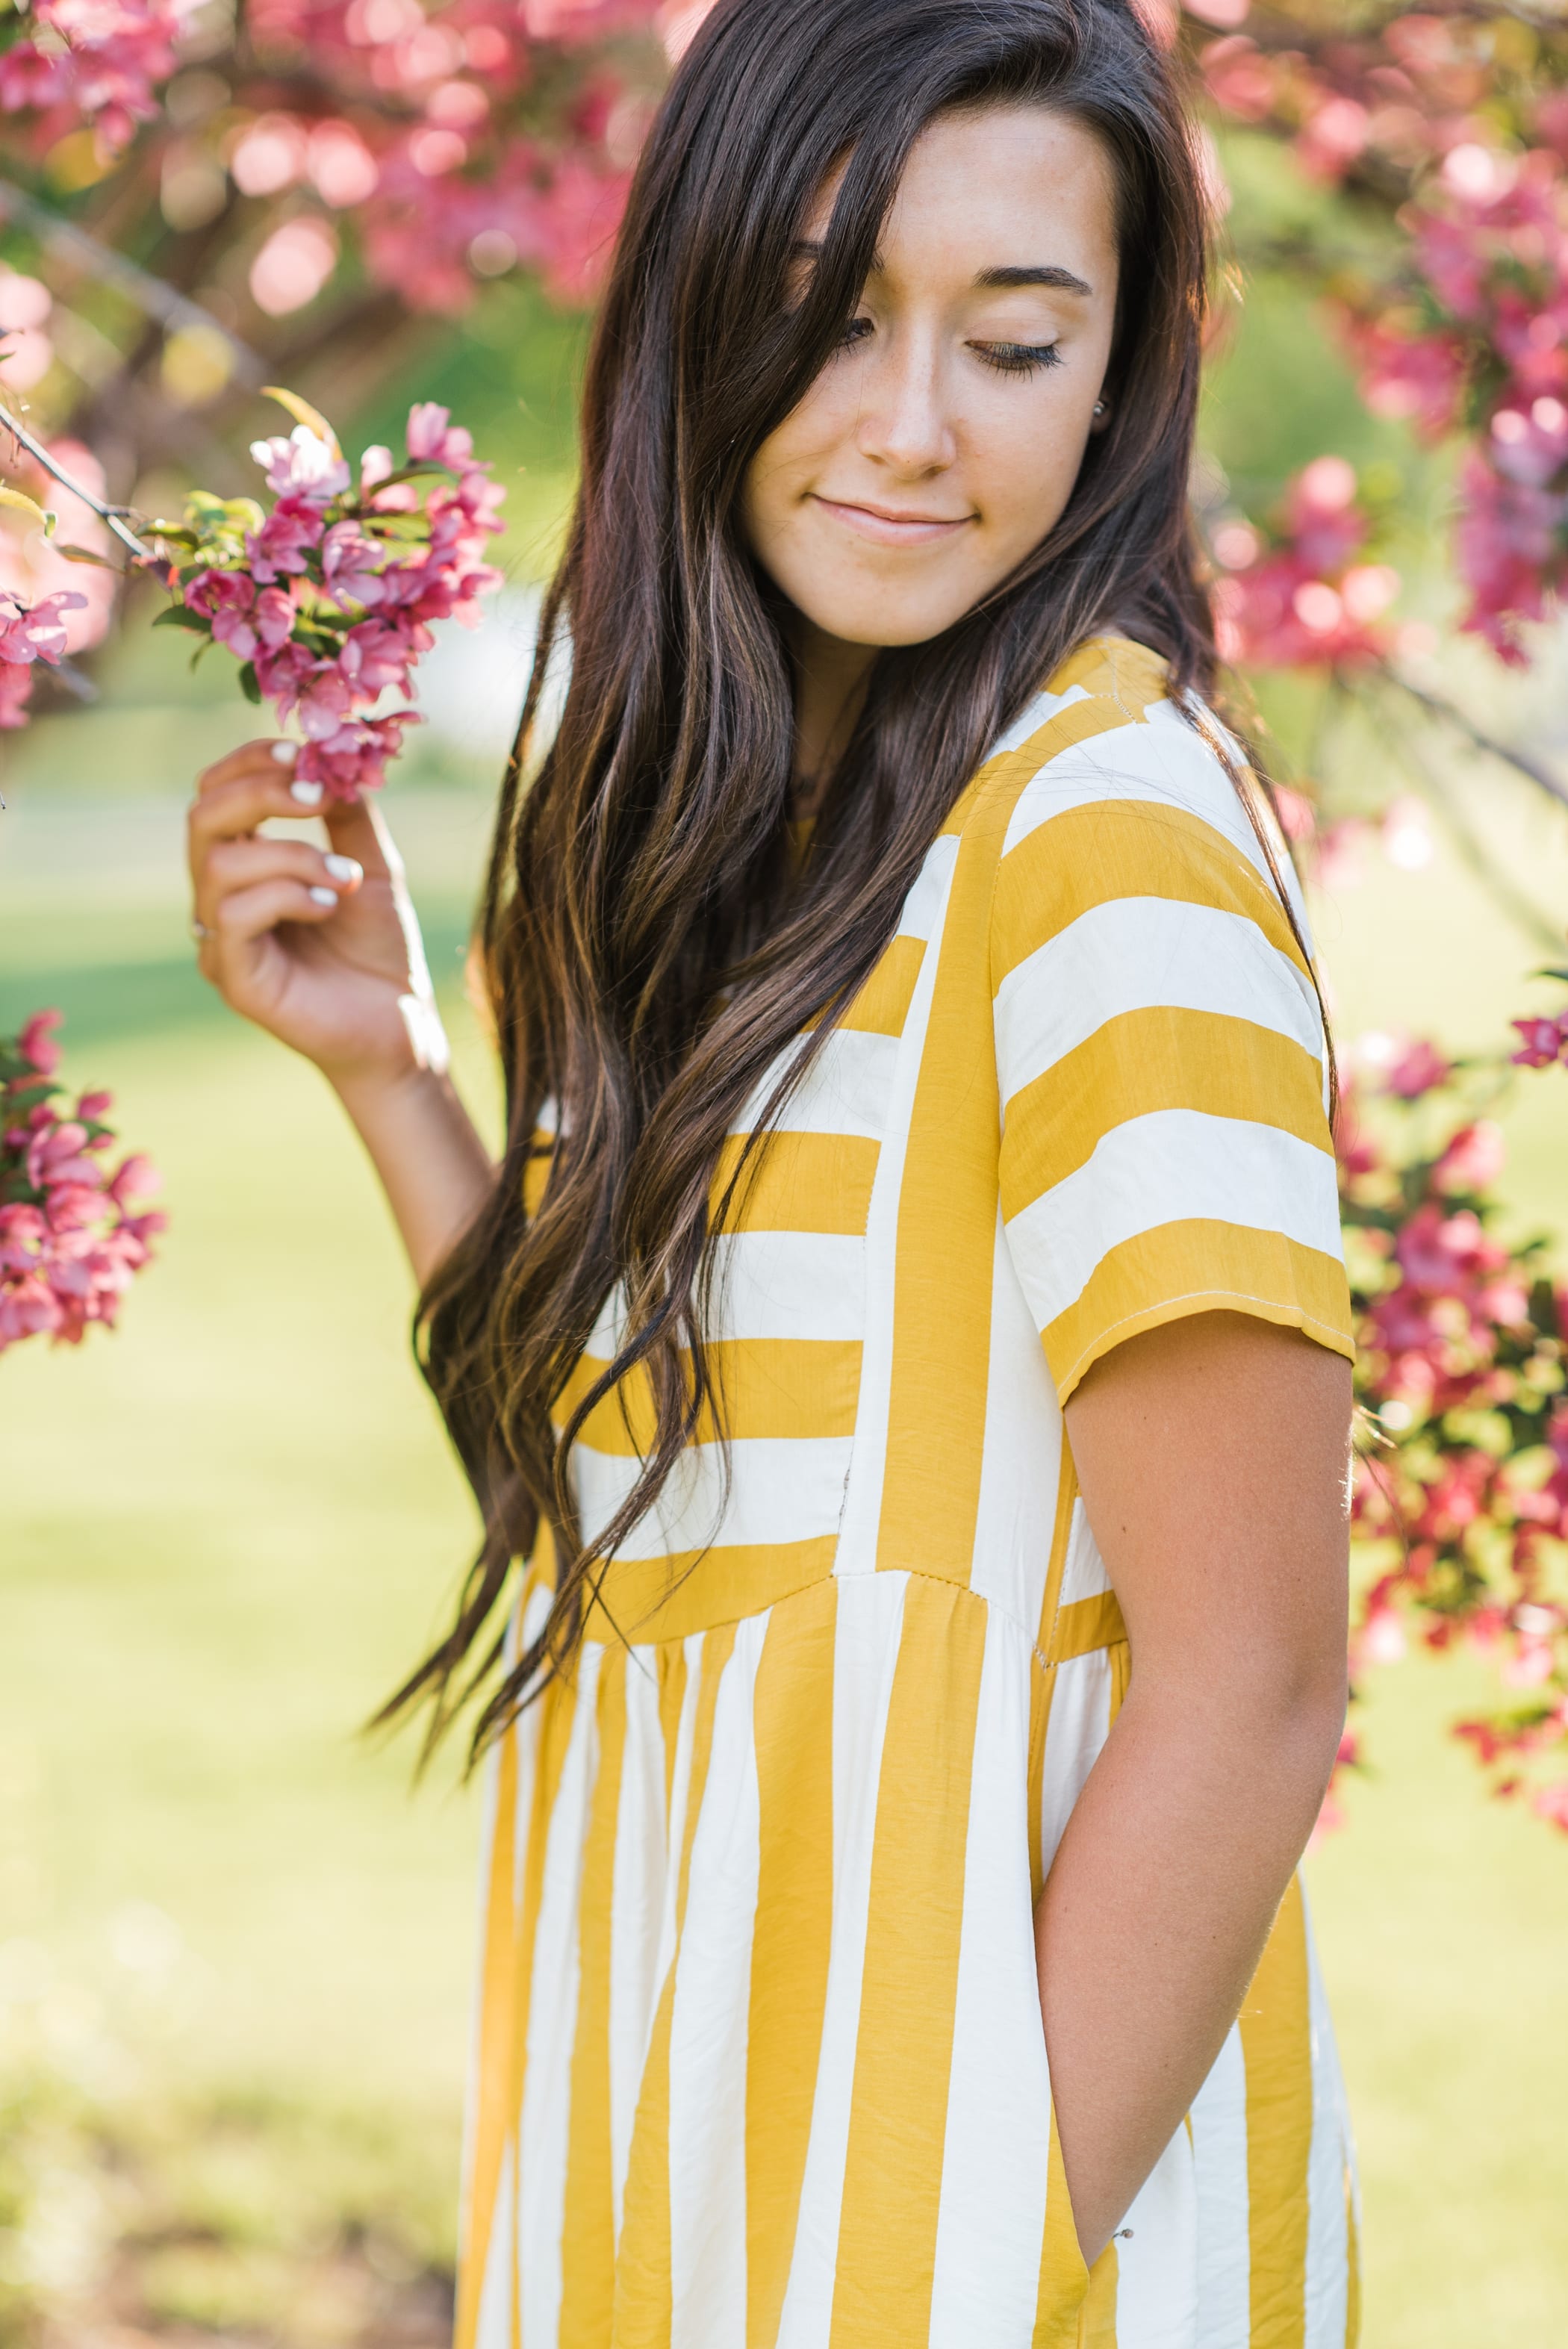 Spring time blossom senior session | Idaho Falls Senior Photographer | Michelle & Logan